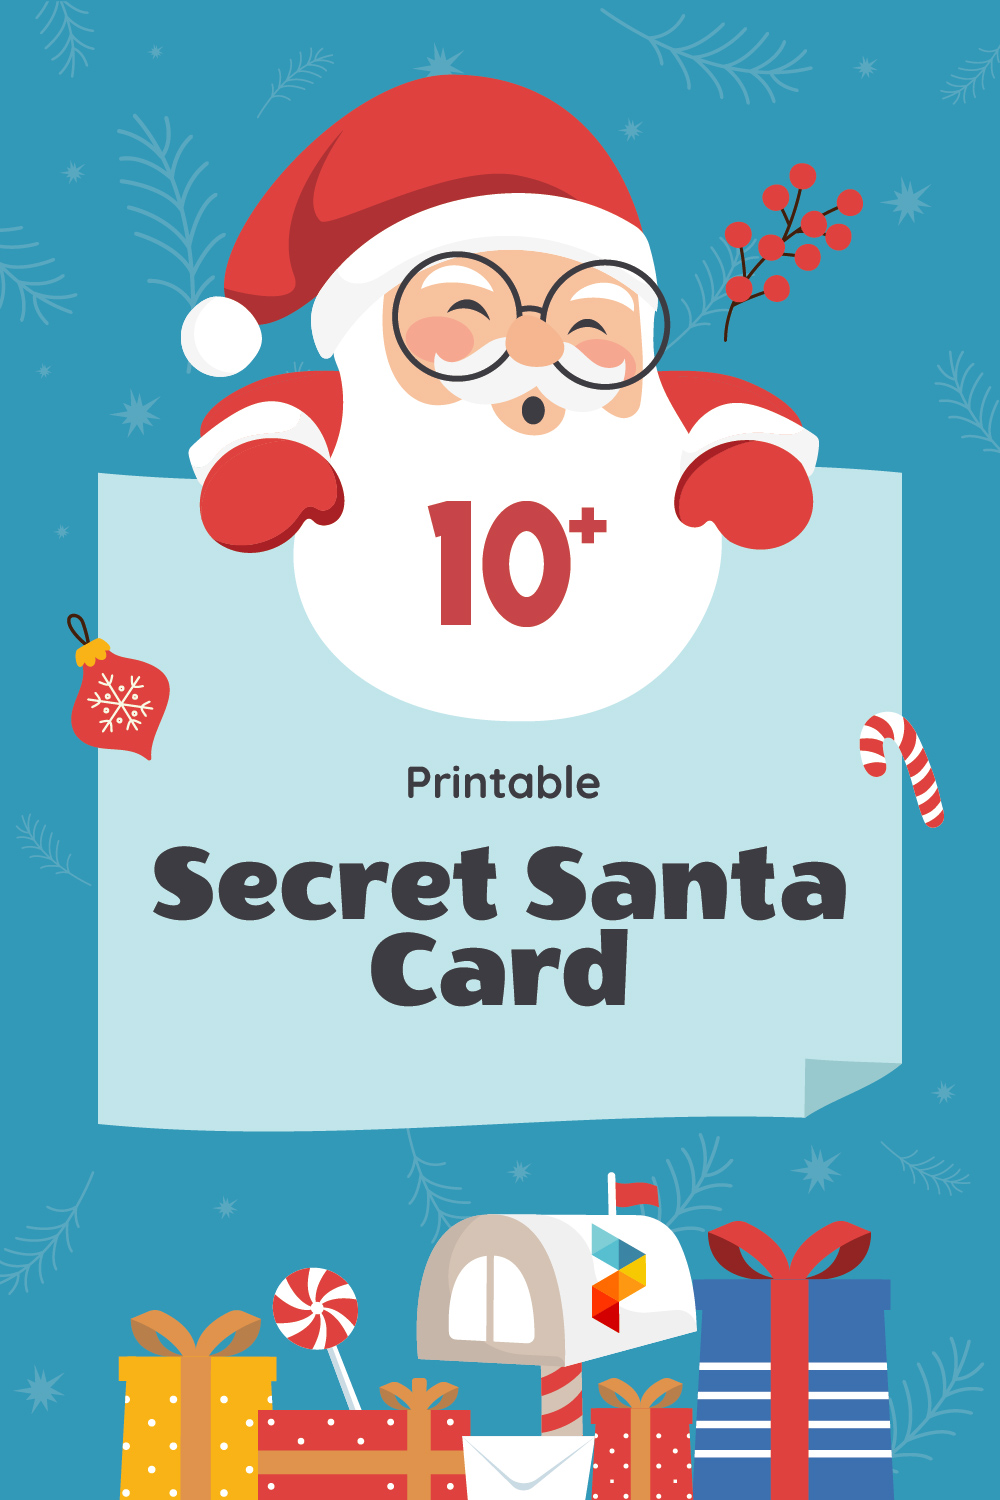 Secret Santa Cards